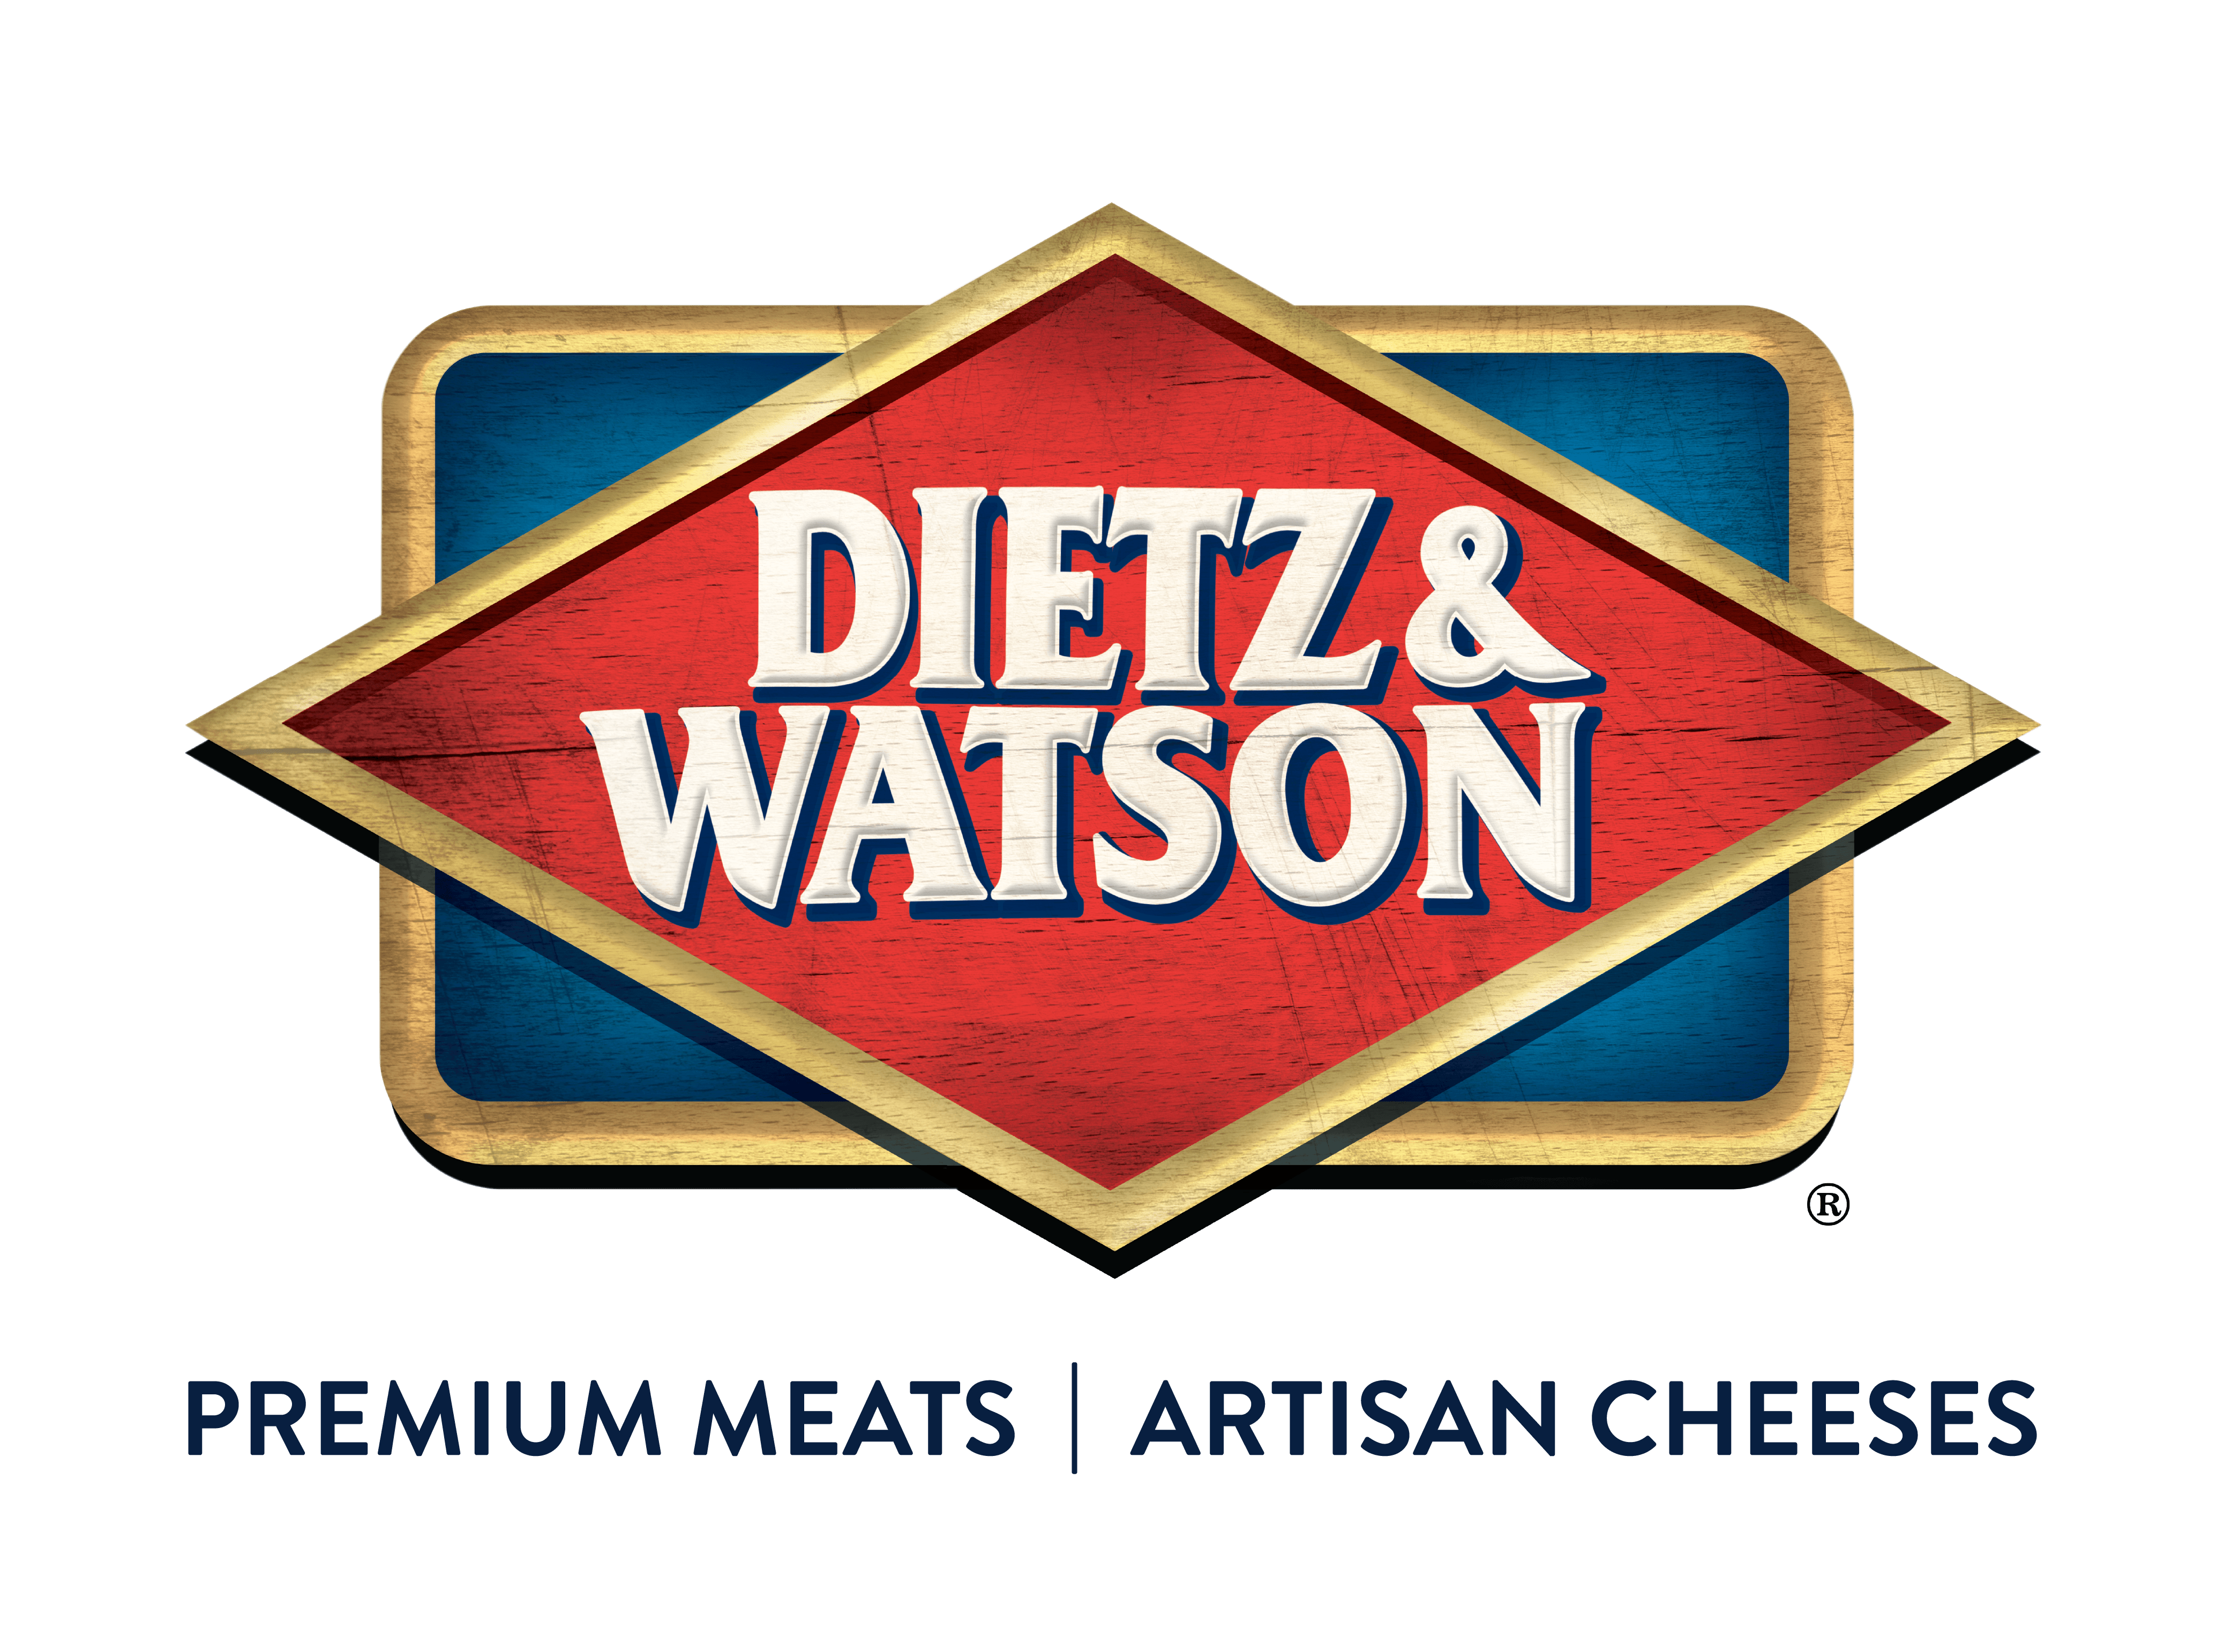 Watson Logo - Dietz and Watson logo